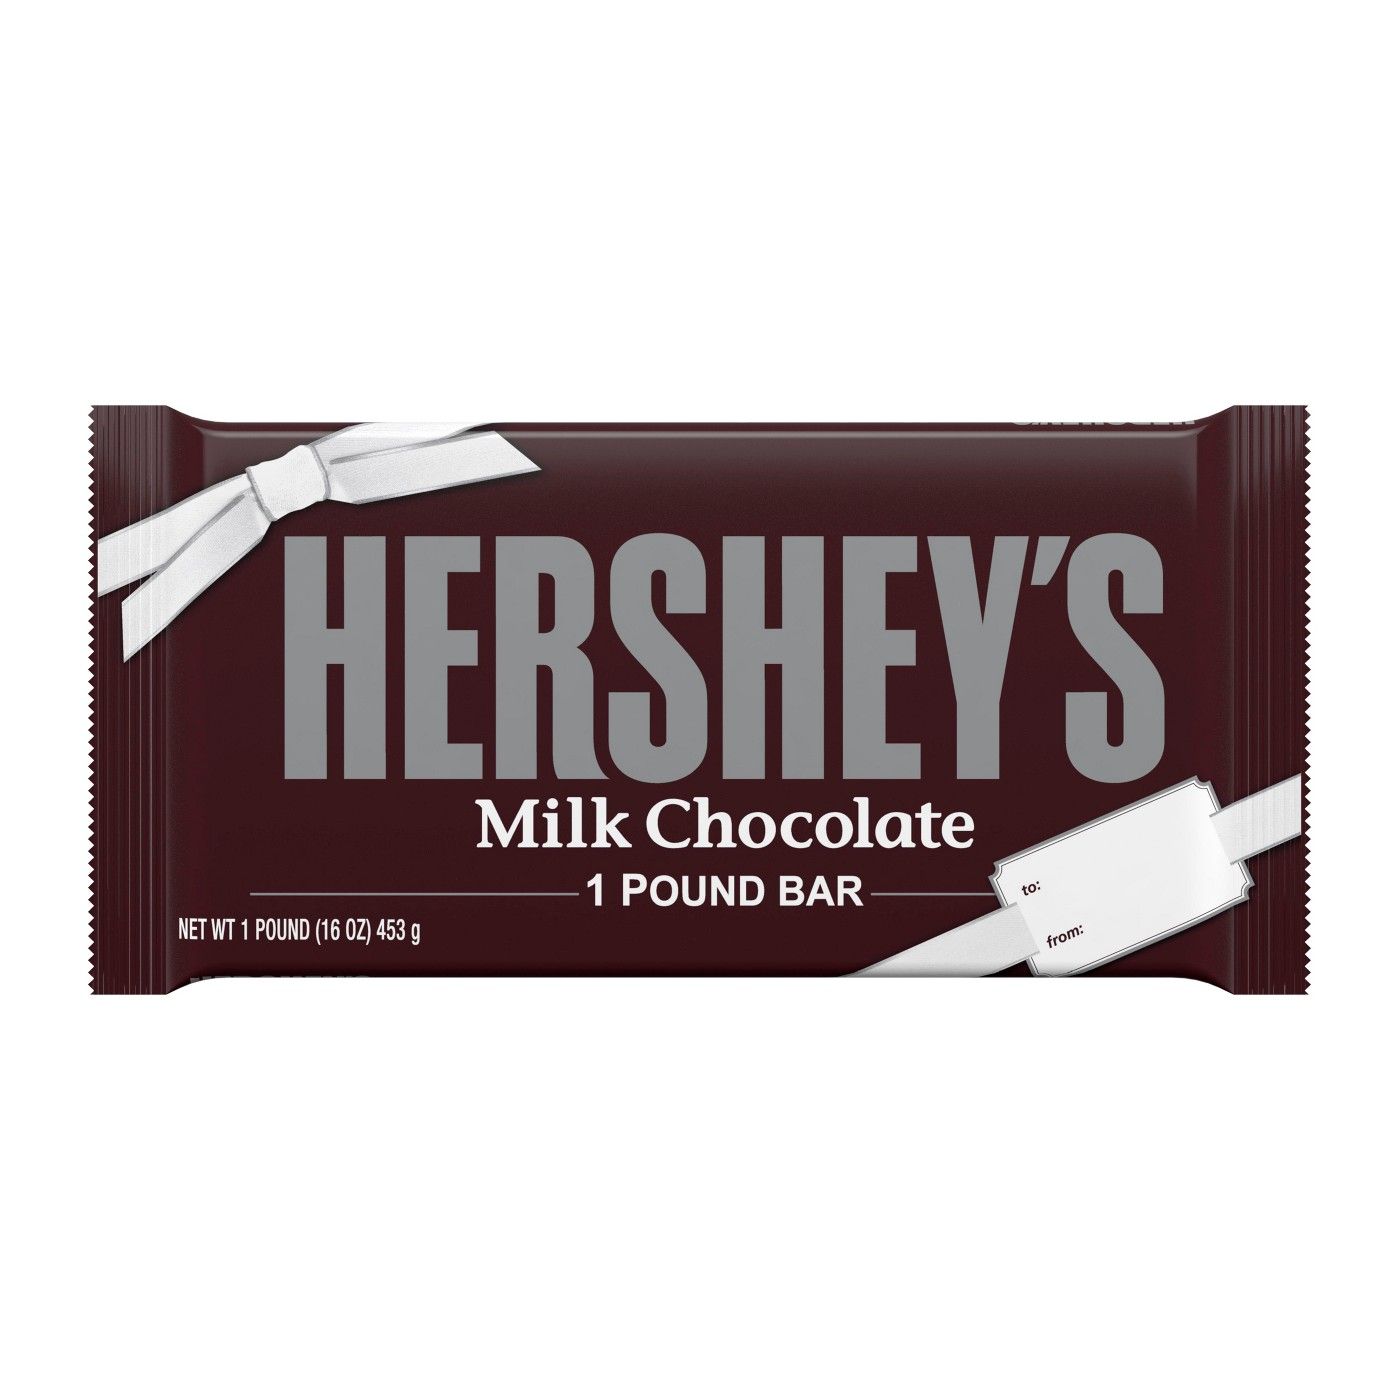 Hershey's Milk Chocolate is Palm Oil Free. Hershey chocolate bar, Hersheys, Hershey milk chocolate bar